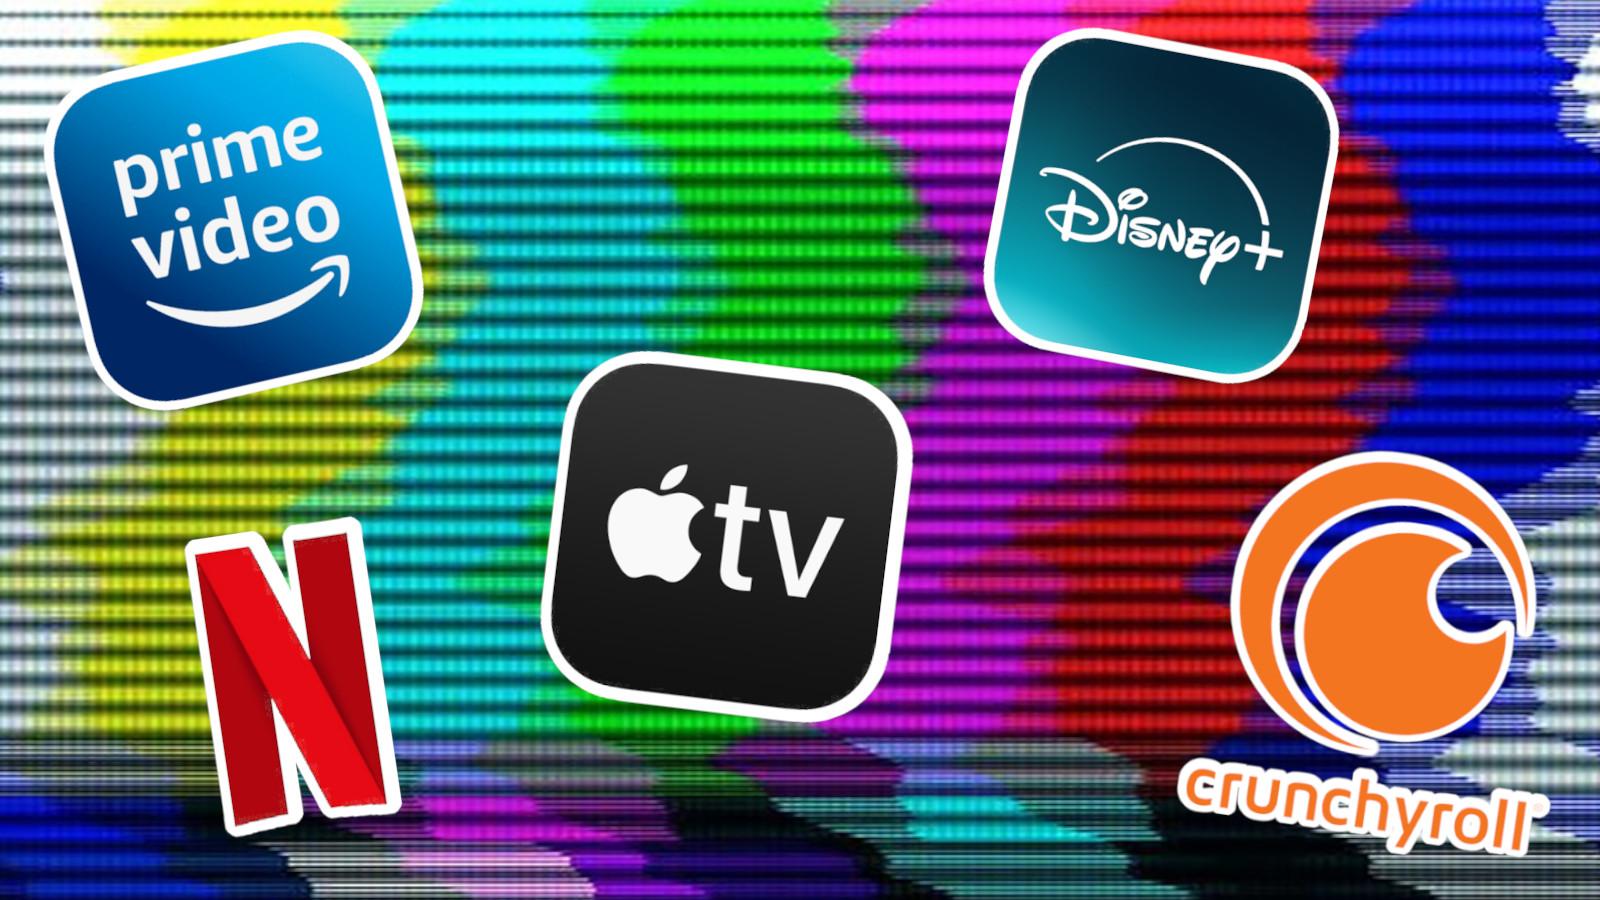 Logos for Prime Video, Netflix, Apple TV+, Disney+ and Crunchyroll